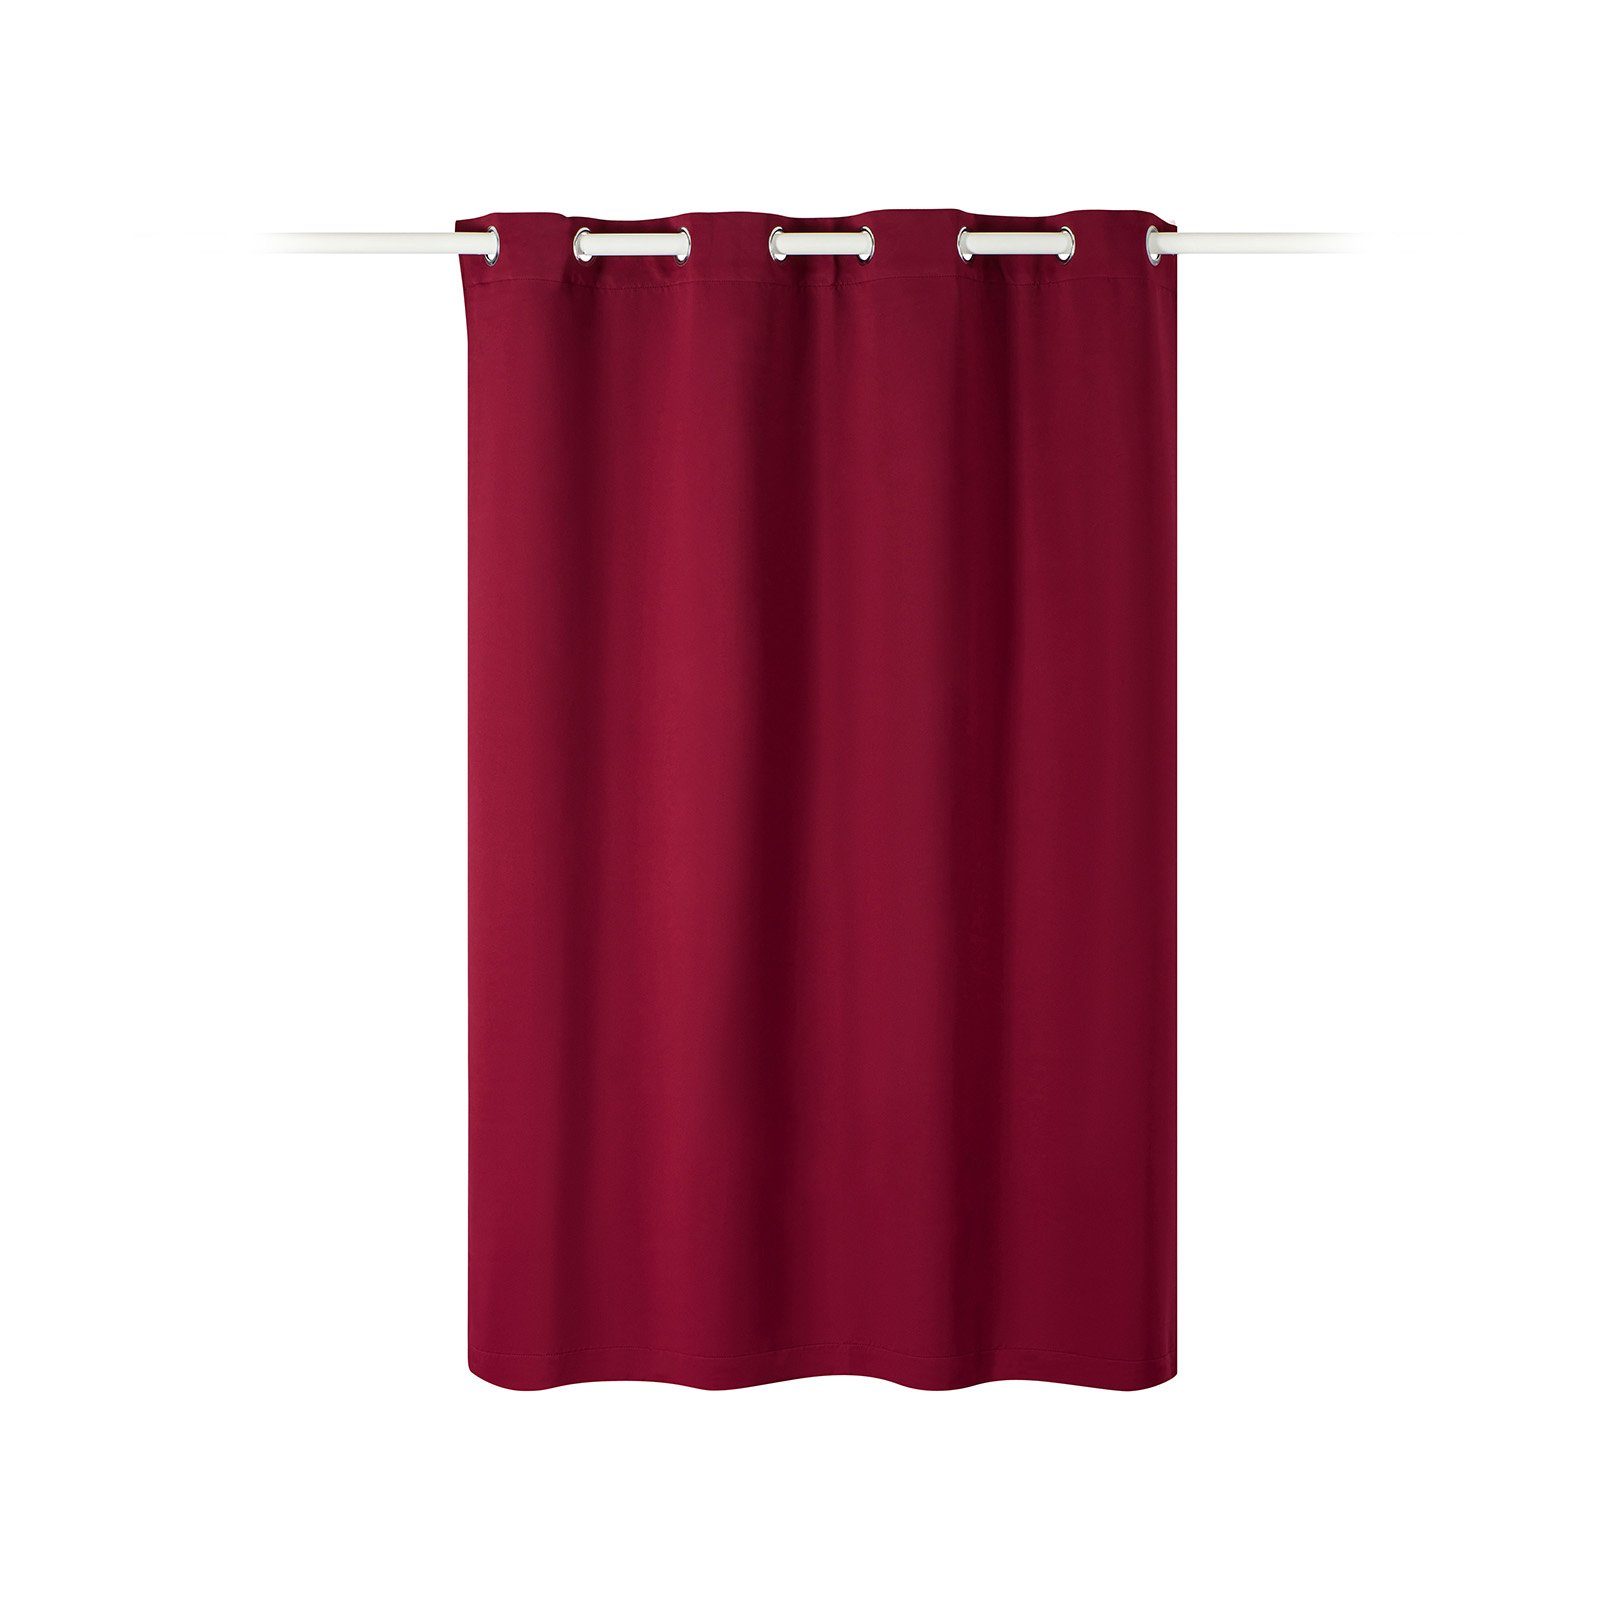 Vorhang Vorhang blickdicht 140x175cm - Ösenschal Verdunkelung - 100%  Polyester, JEMIDI | Fertiggardinen